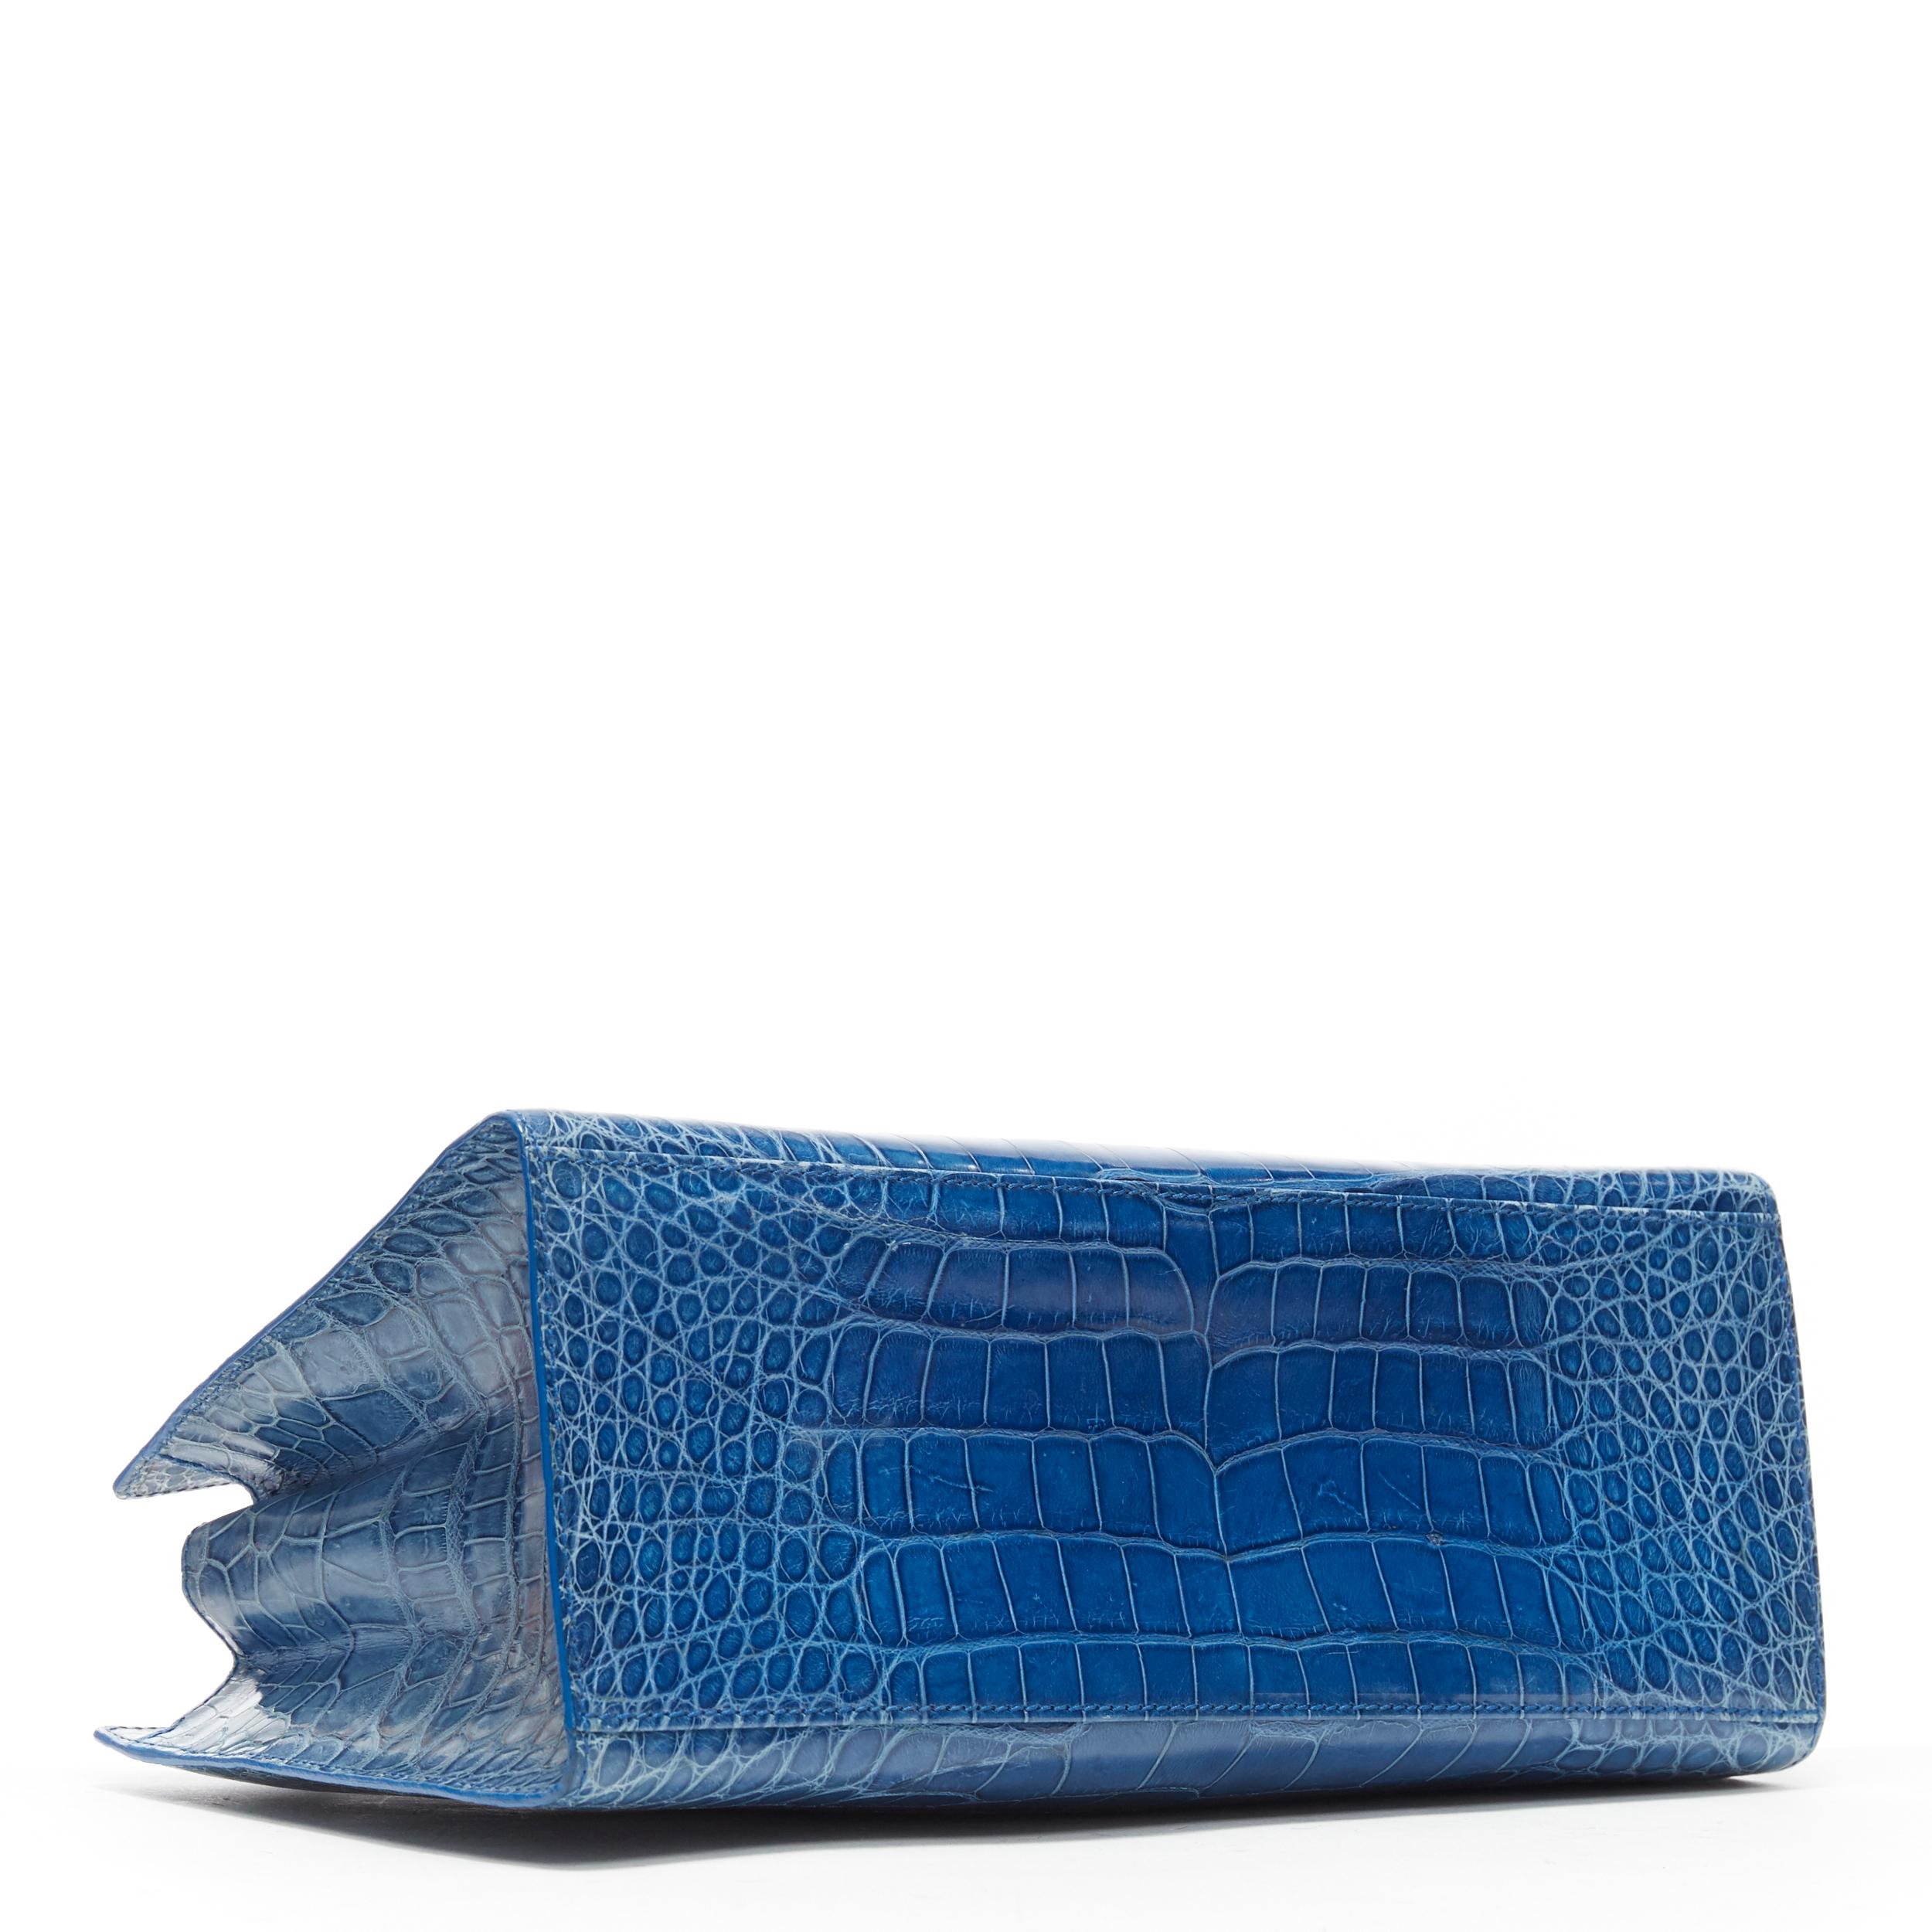 Blue RALPH LAUREN blue crocodile leather top handle structured evening bag